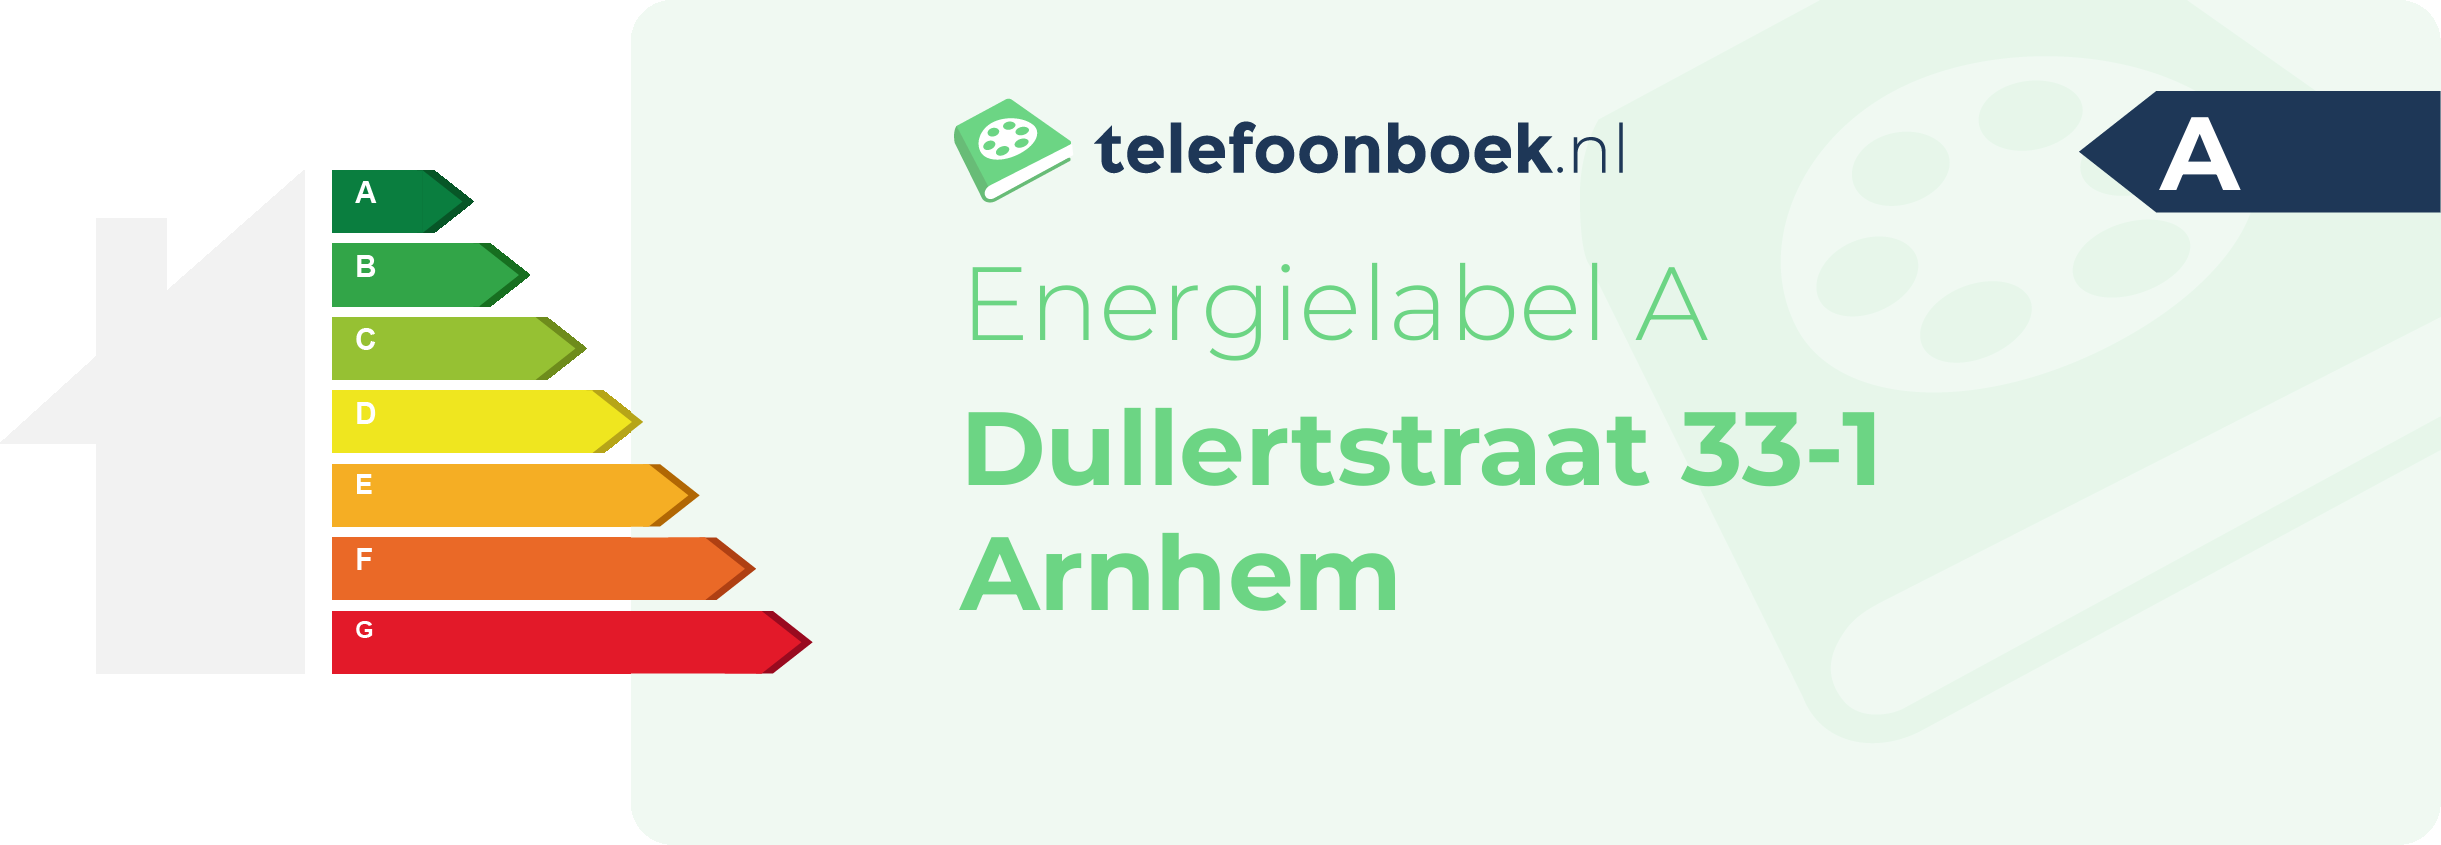 Energielabel Dullertstraat 33-1 Arnhem